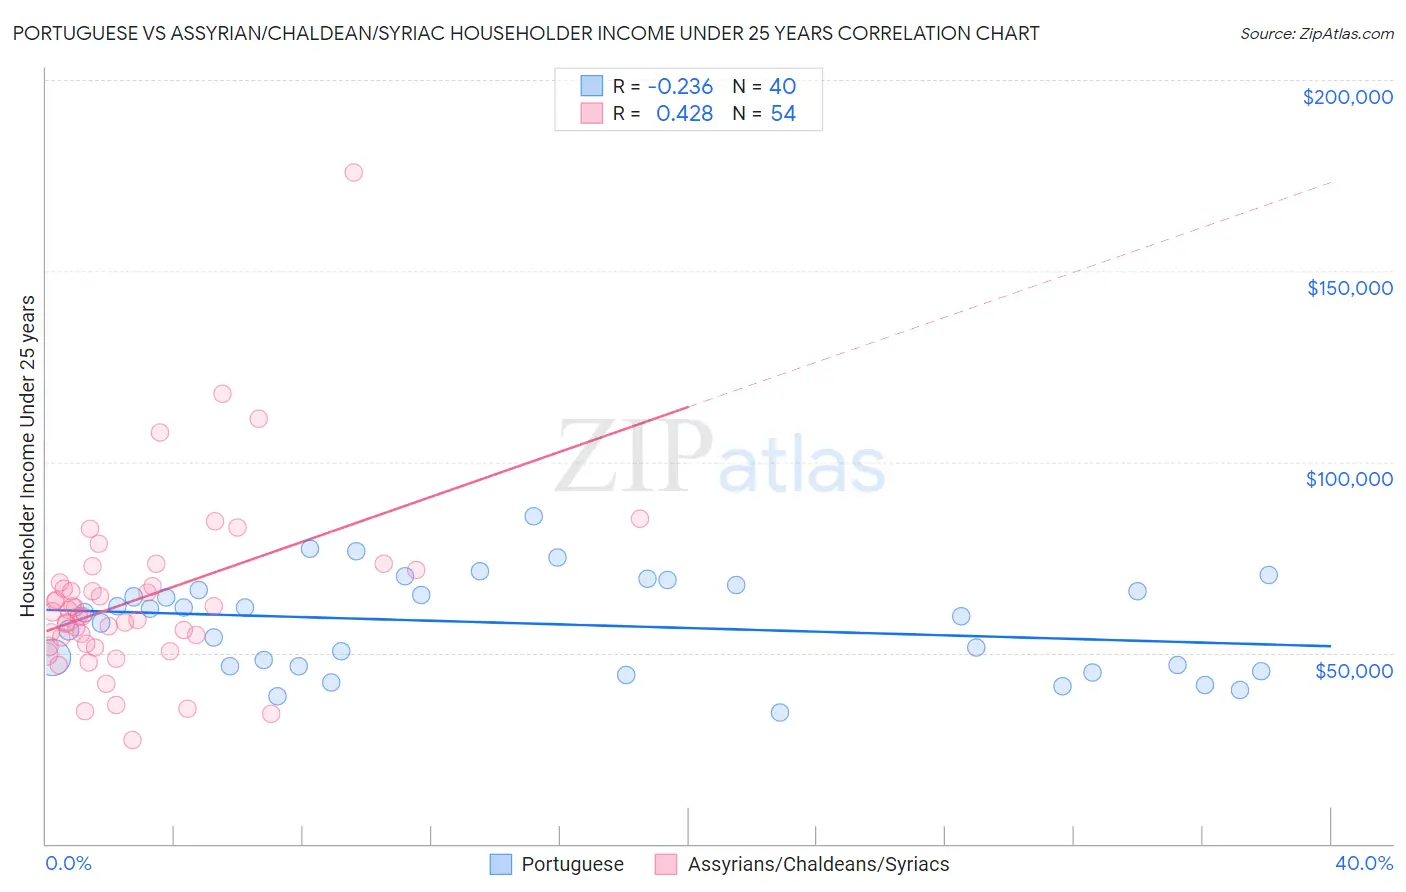 Portuguese vs Assyrian/Chaldean/Syriac Householder Income Under 25 years